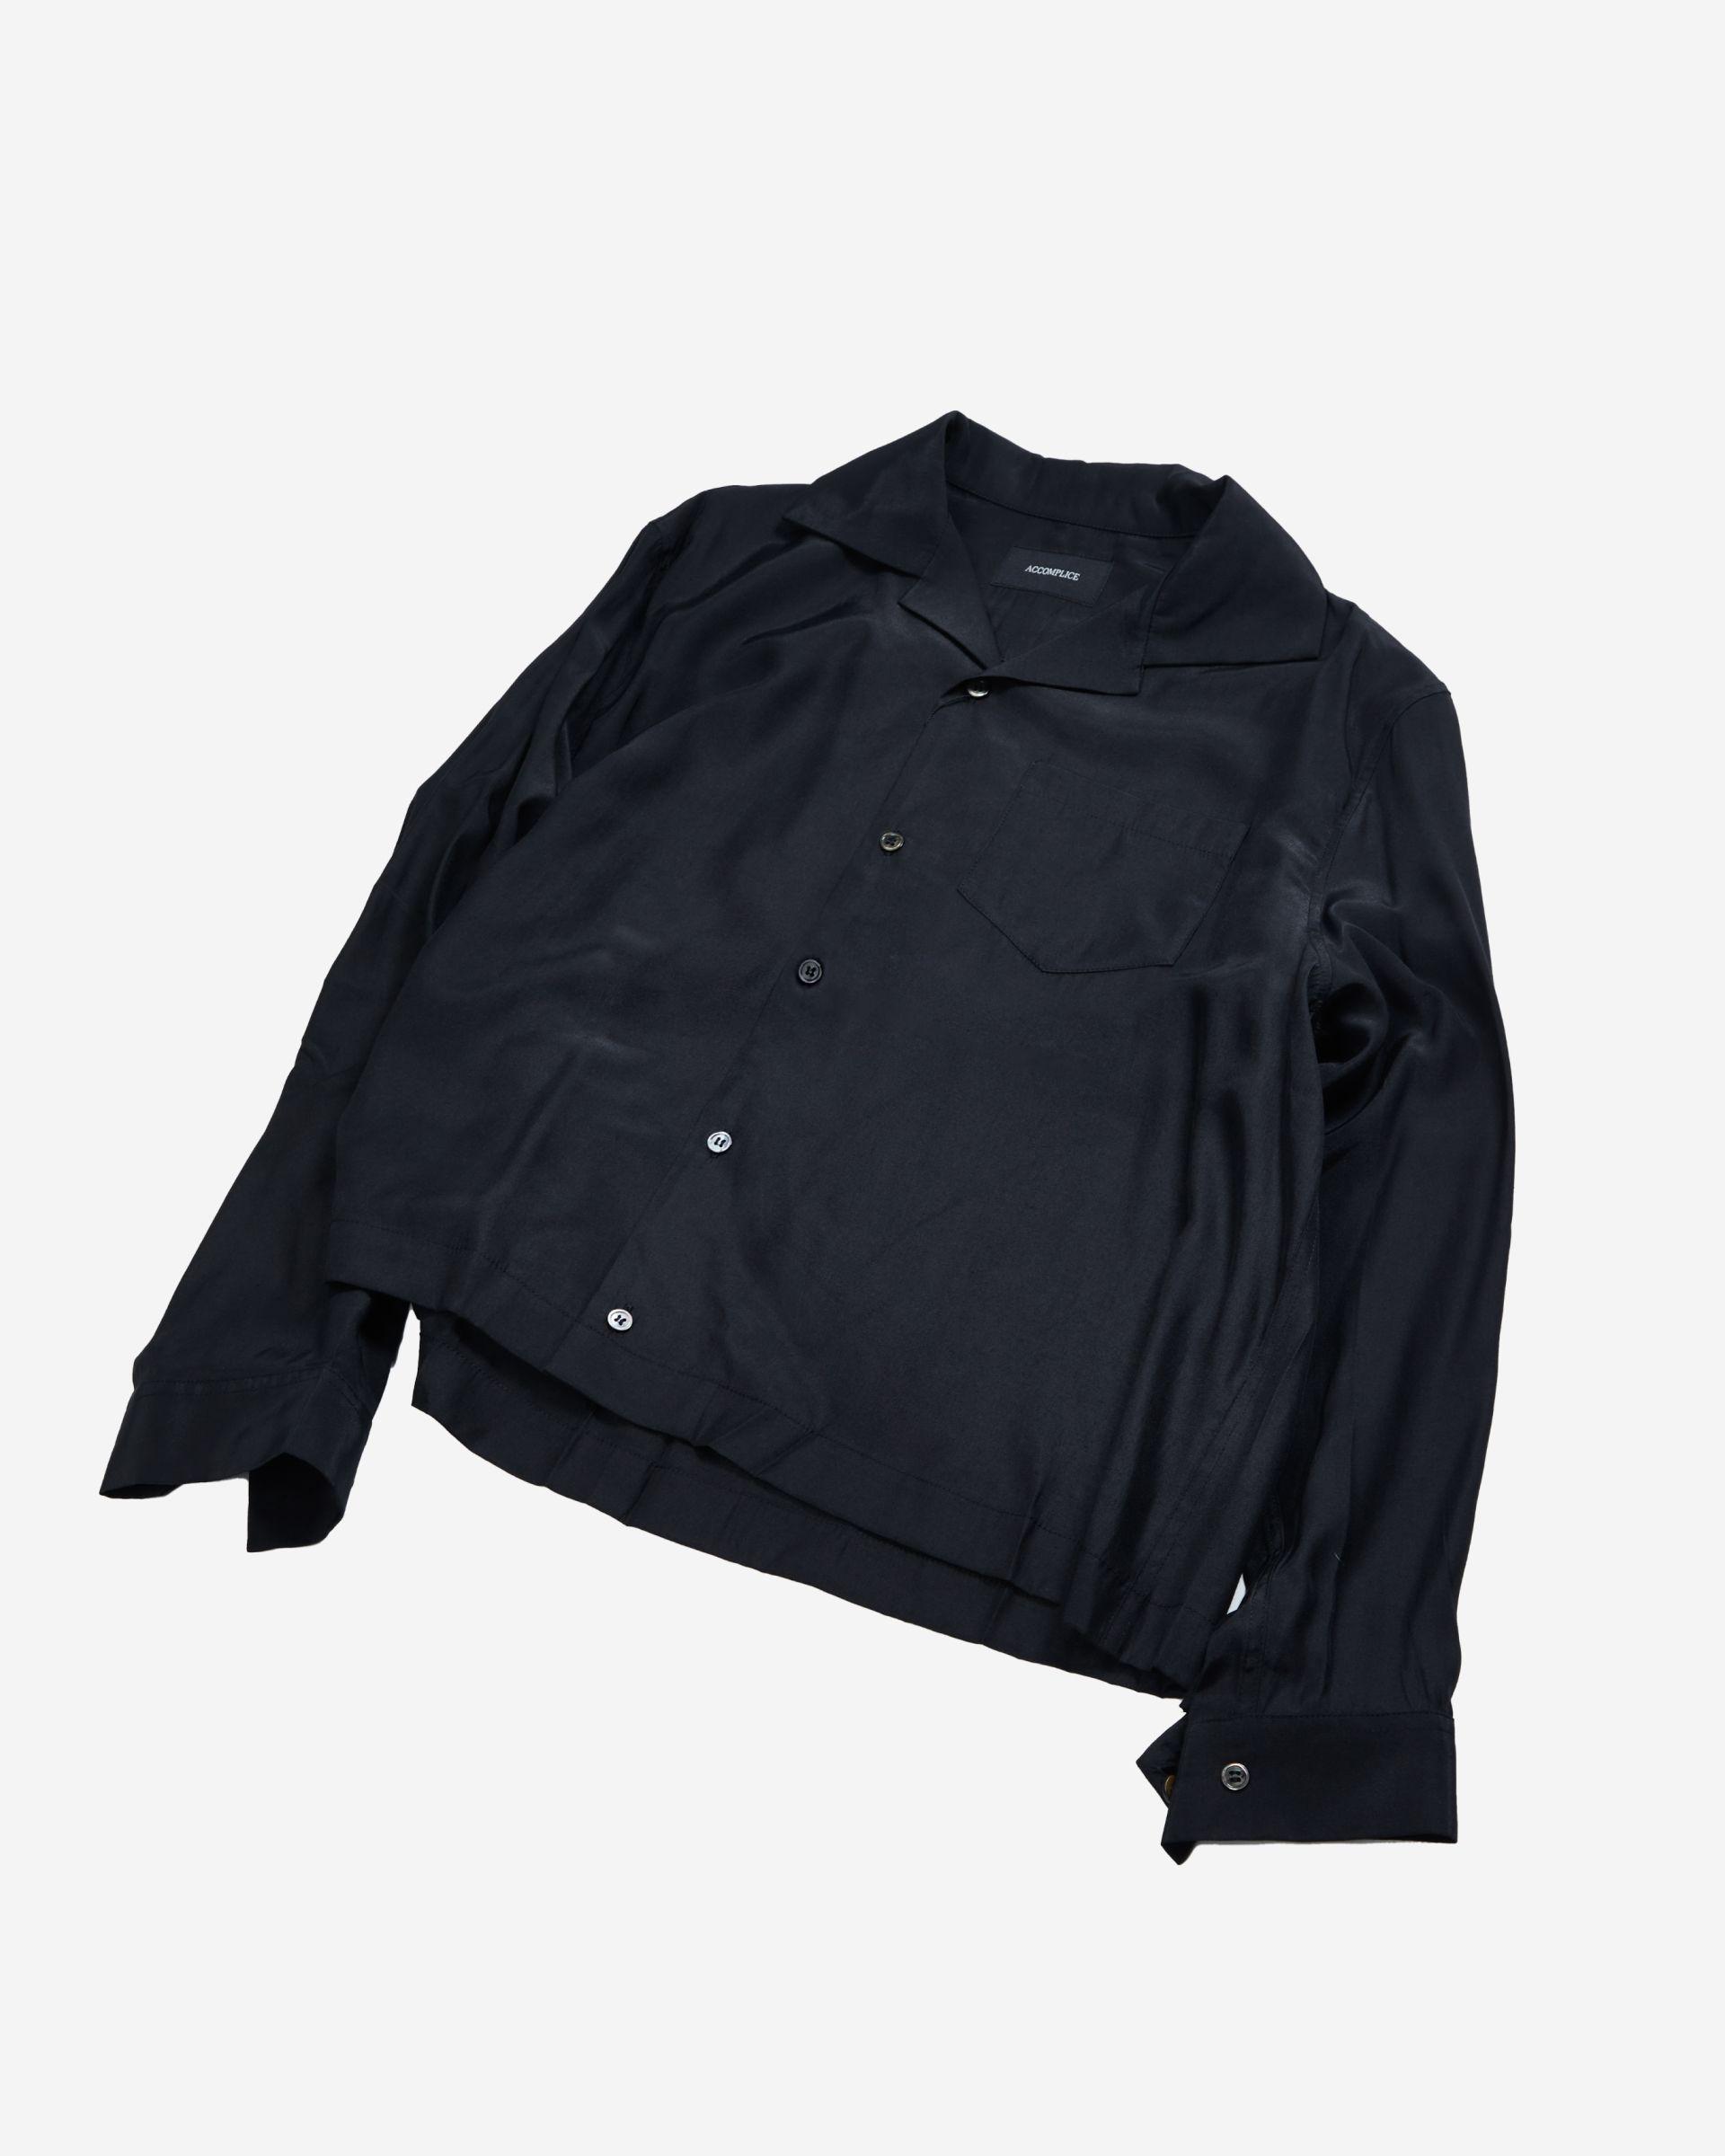 Lilium Shirt in Black